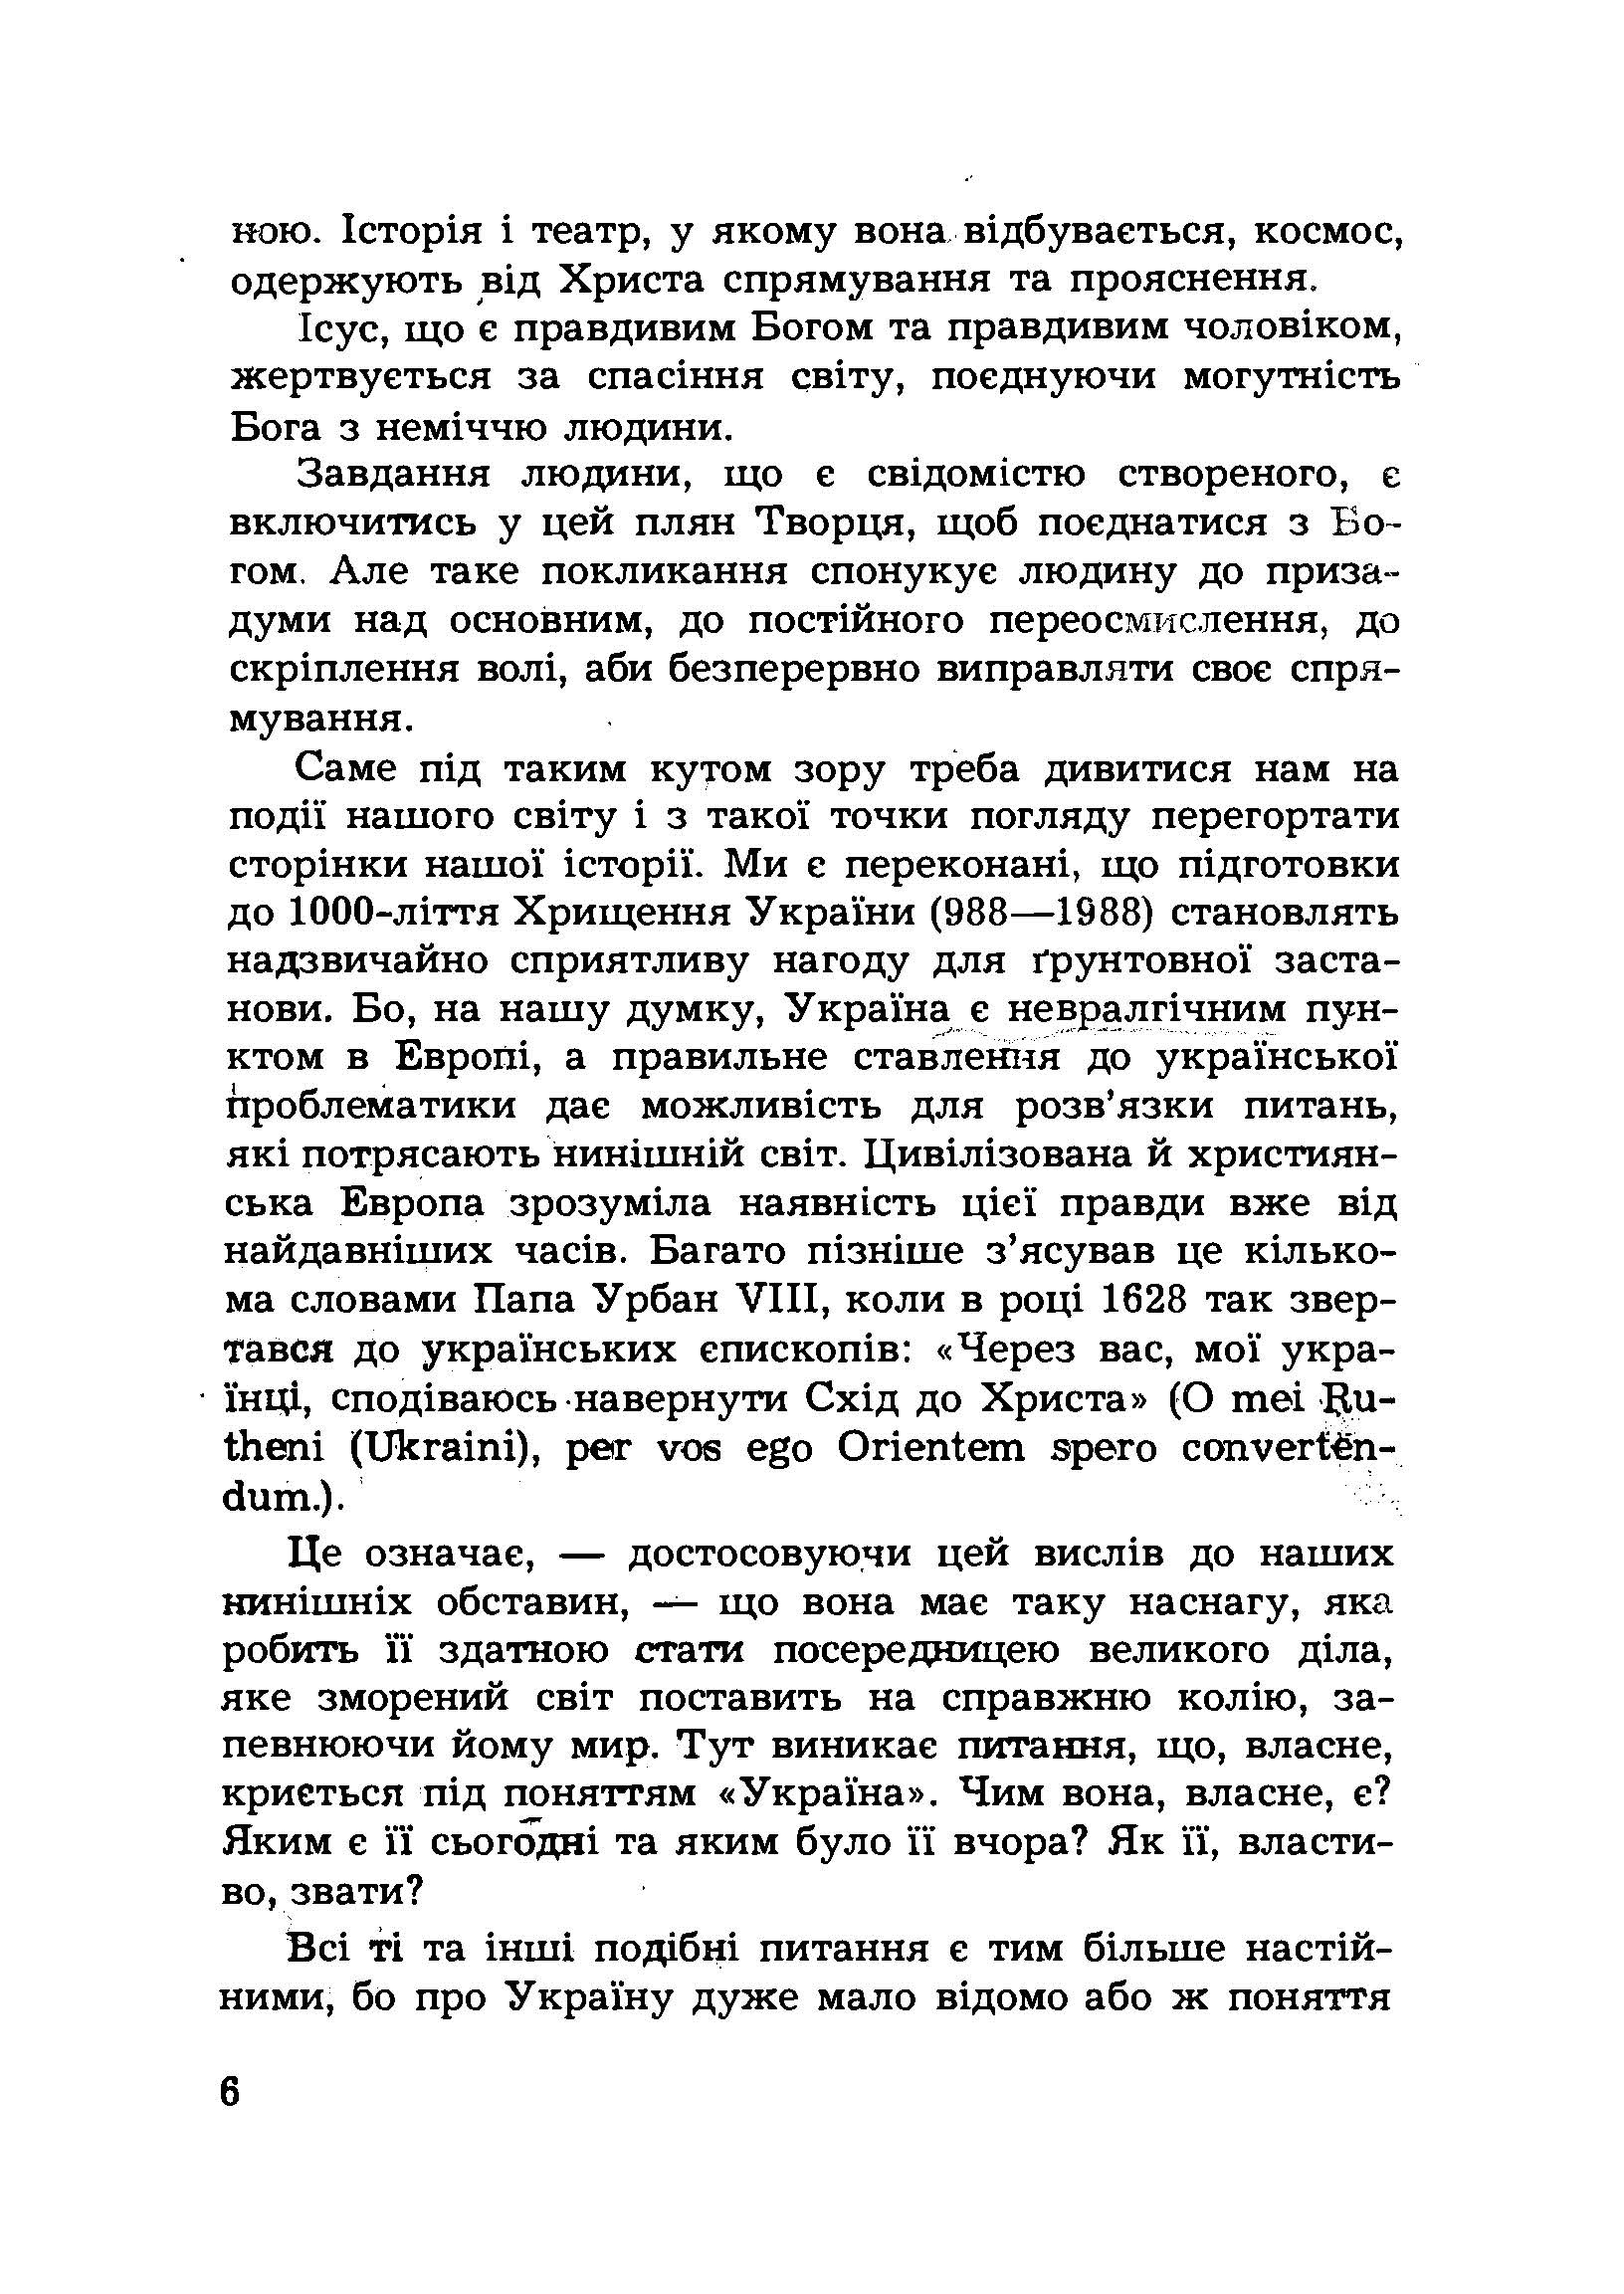 Хрищення, хрест та харизма України. Автор — Иван Ортынский. 